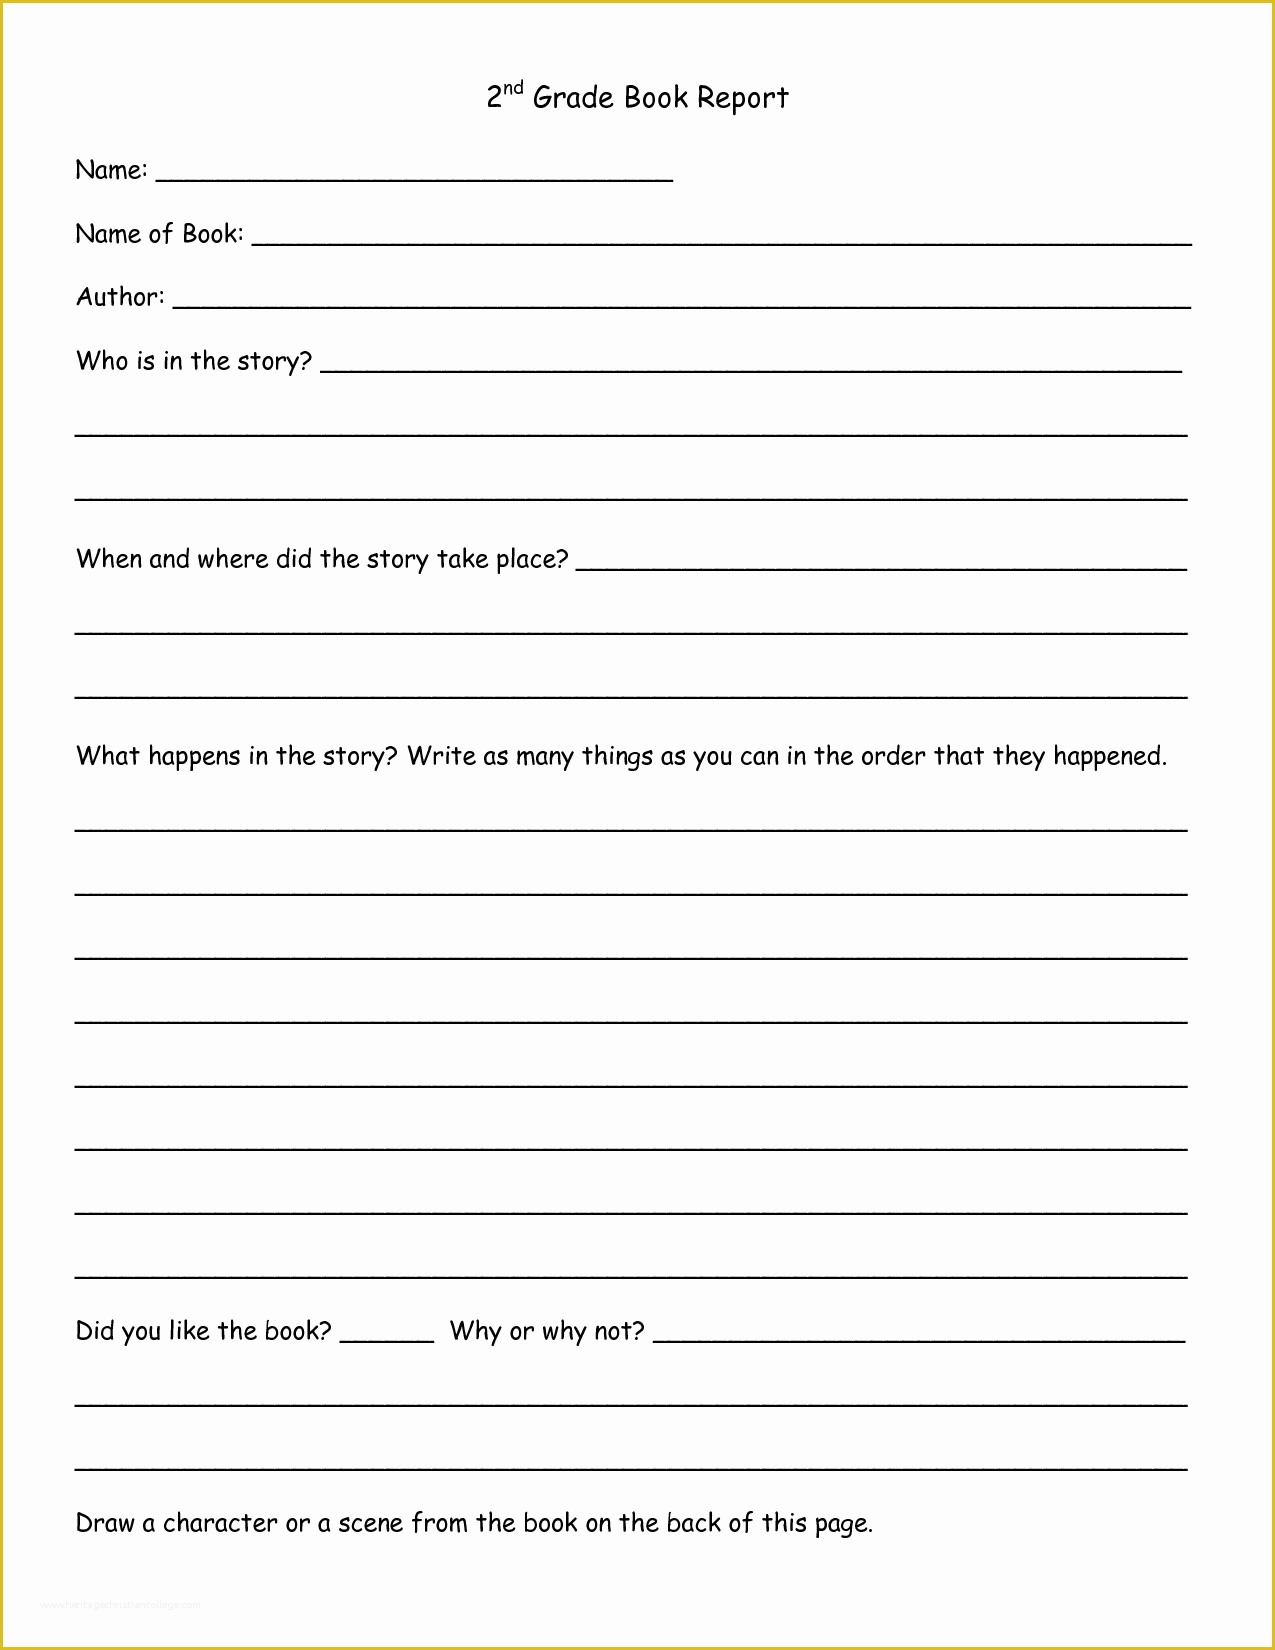 3rd Grade Book Report Template Free Of 2nd Grade Book Report Template Google Search